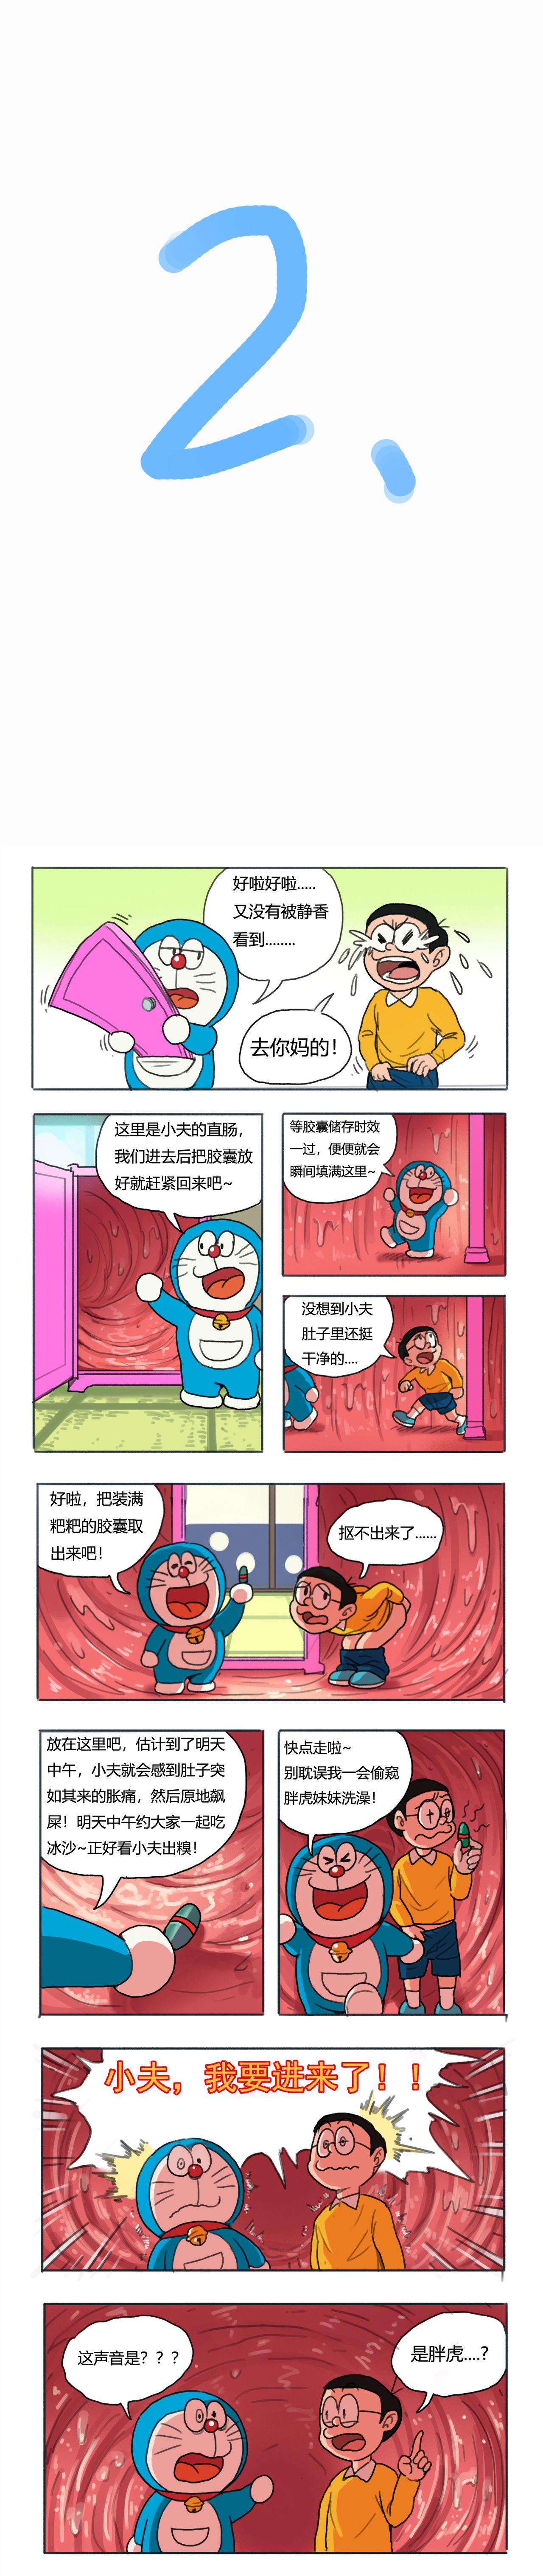 Costume 哆啦AV梦 - Doraemon Fitness - Page 2